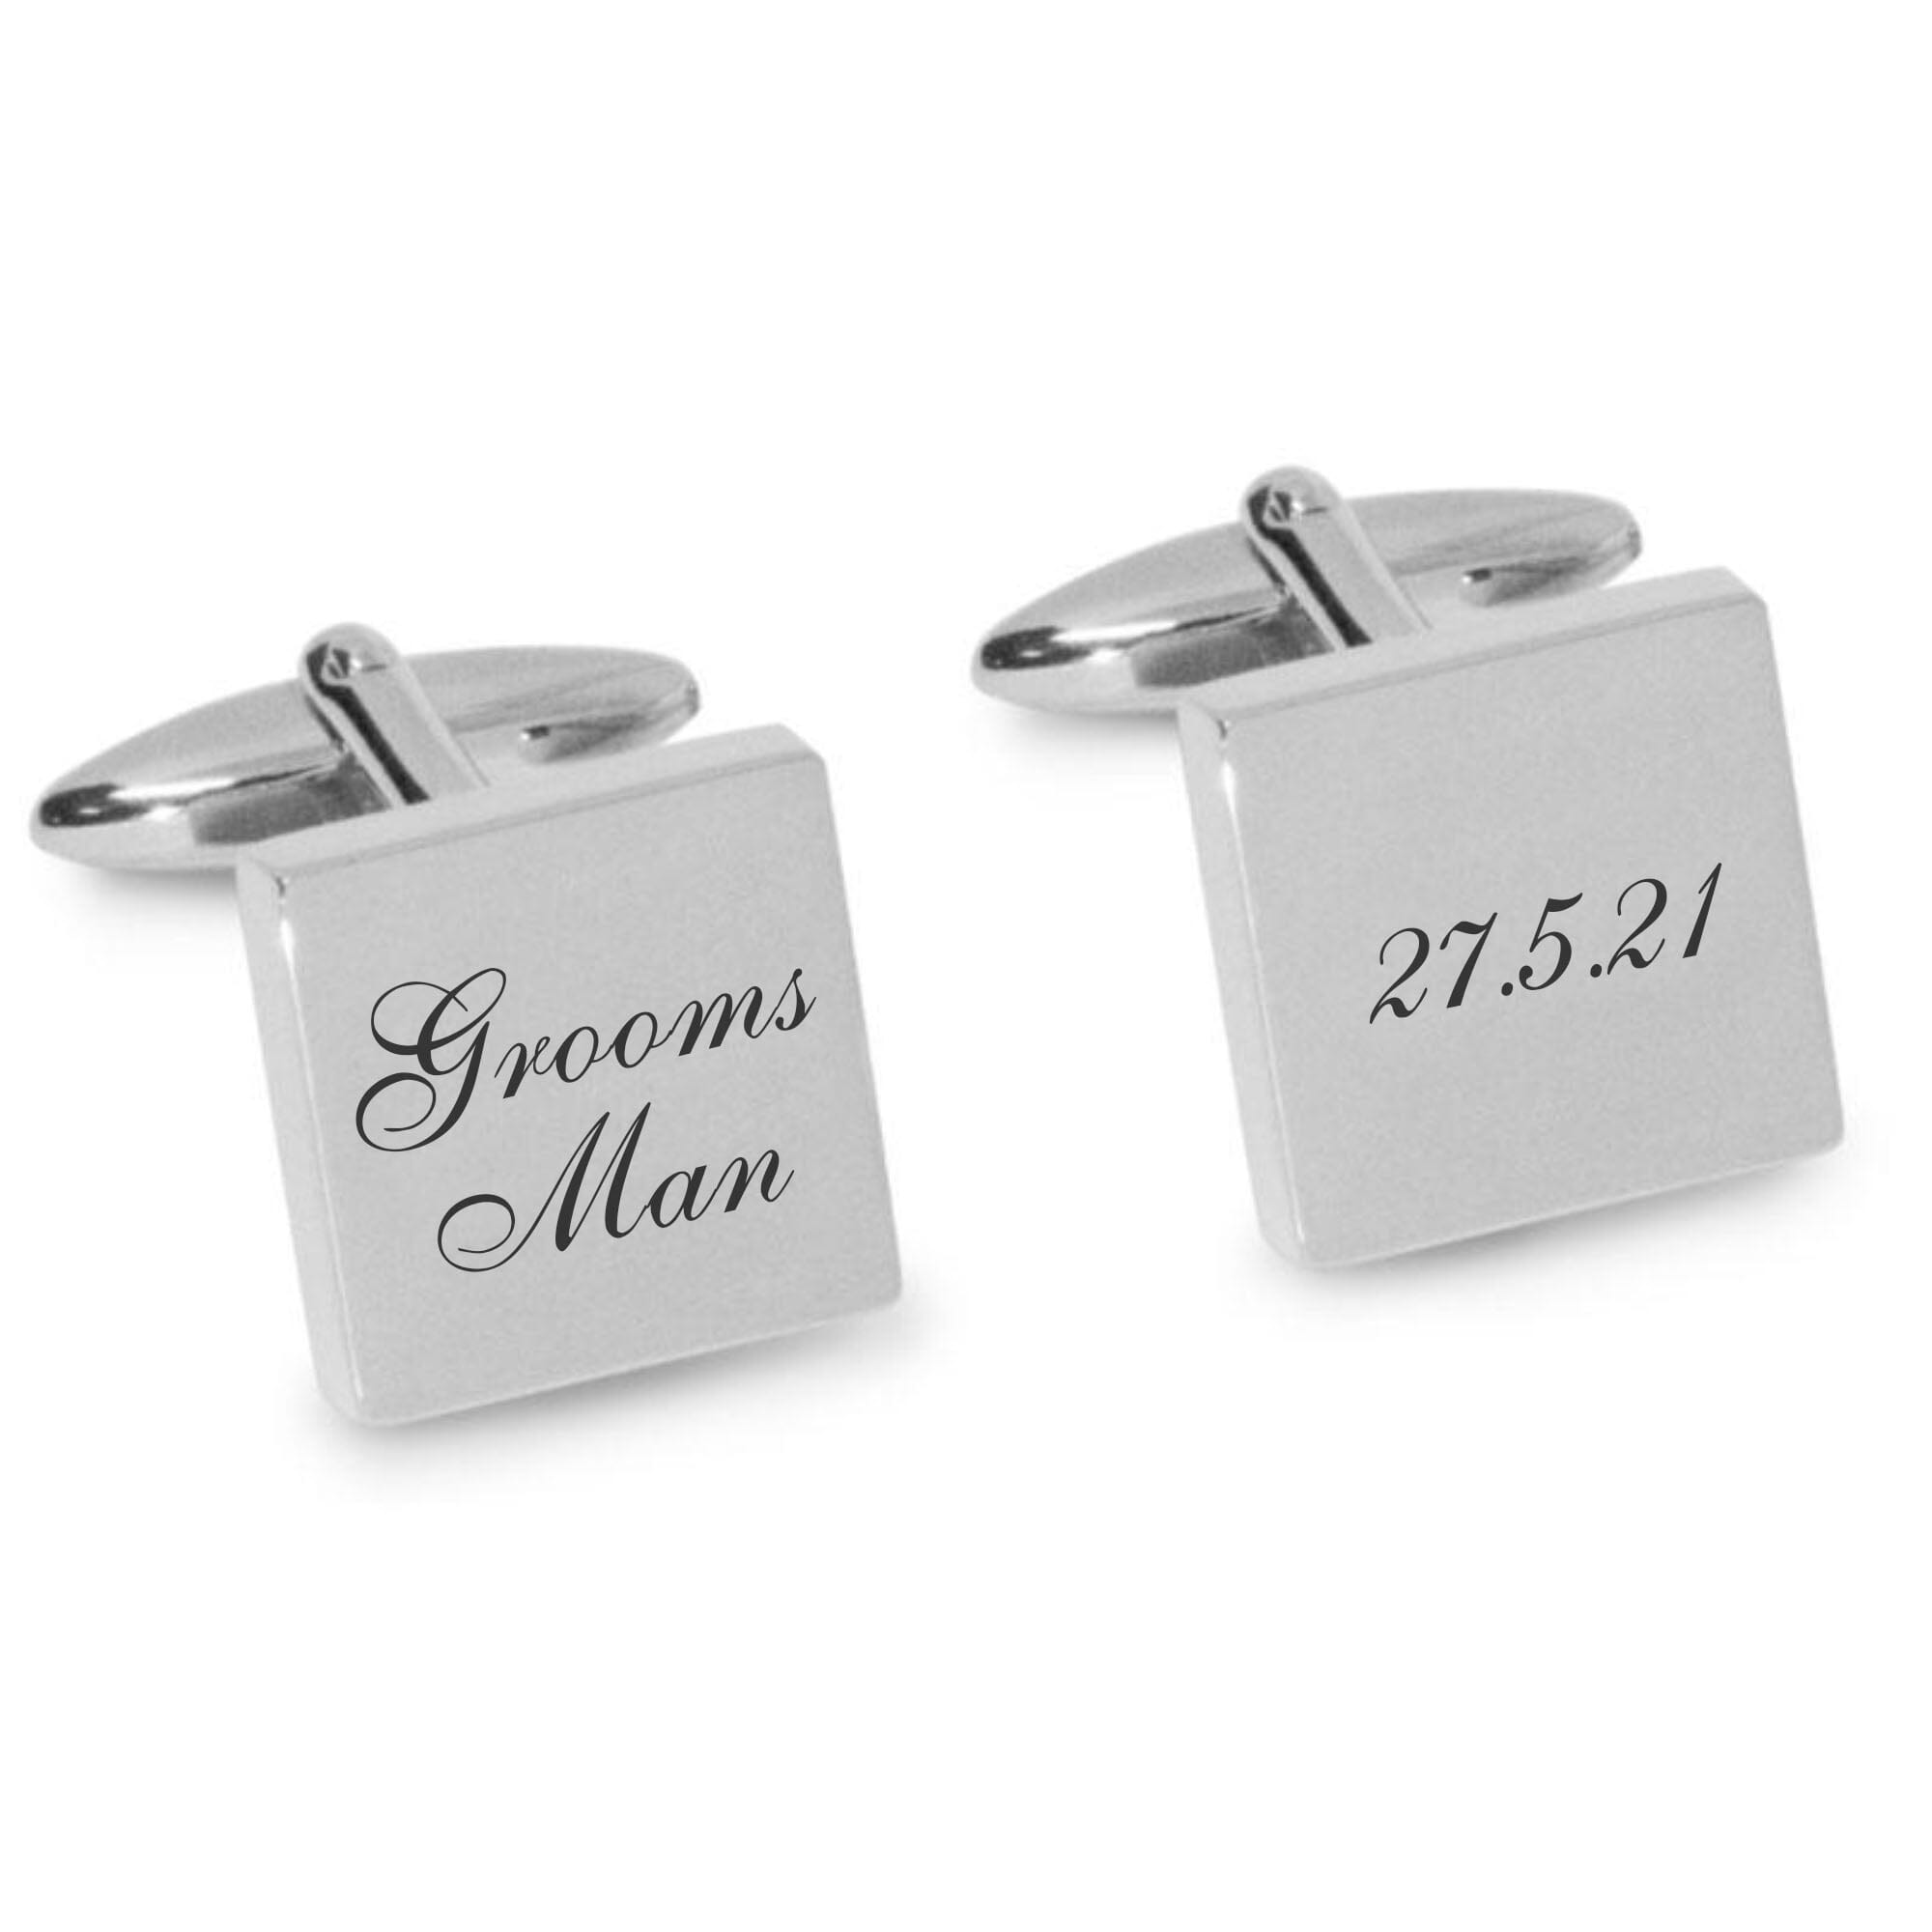 Grooms Man Wedding Date Engraved Cufflinks Engraving Cufflinks Clinks Australia 